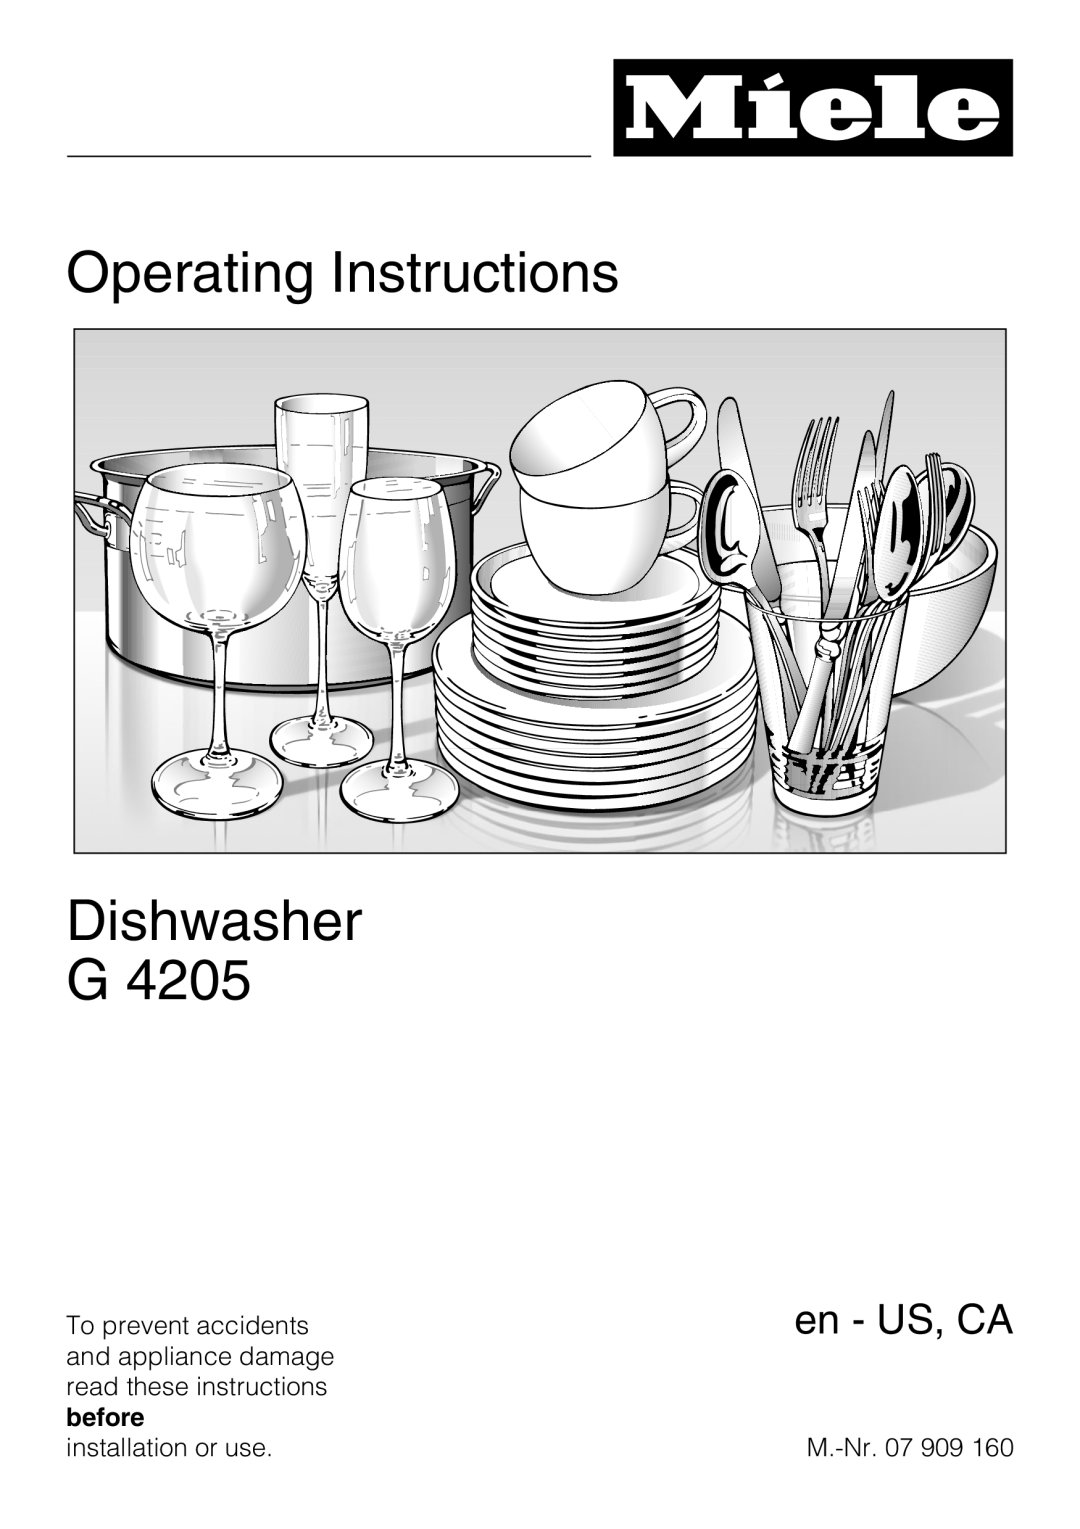 Miele G 4205 operating instructions Operating Instructions, Dishwasher, en - US, CA 